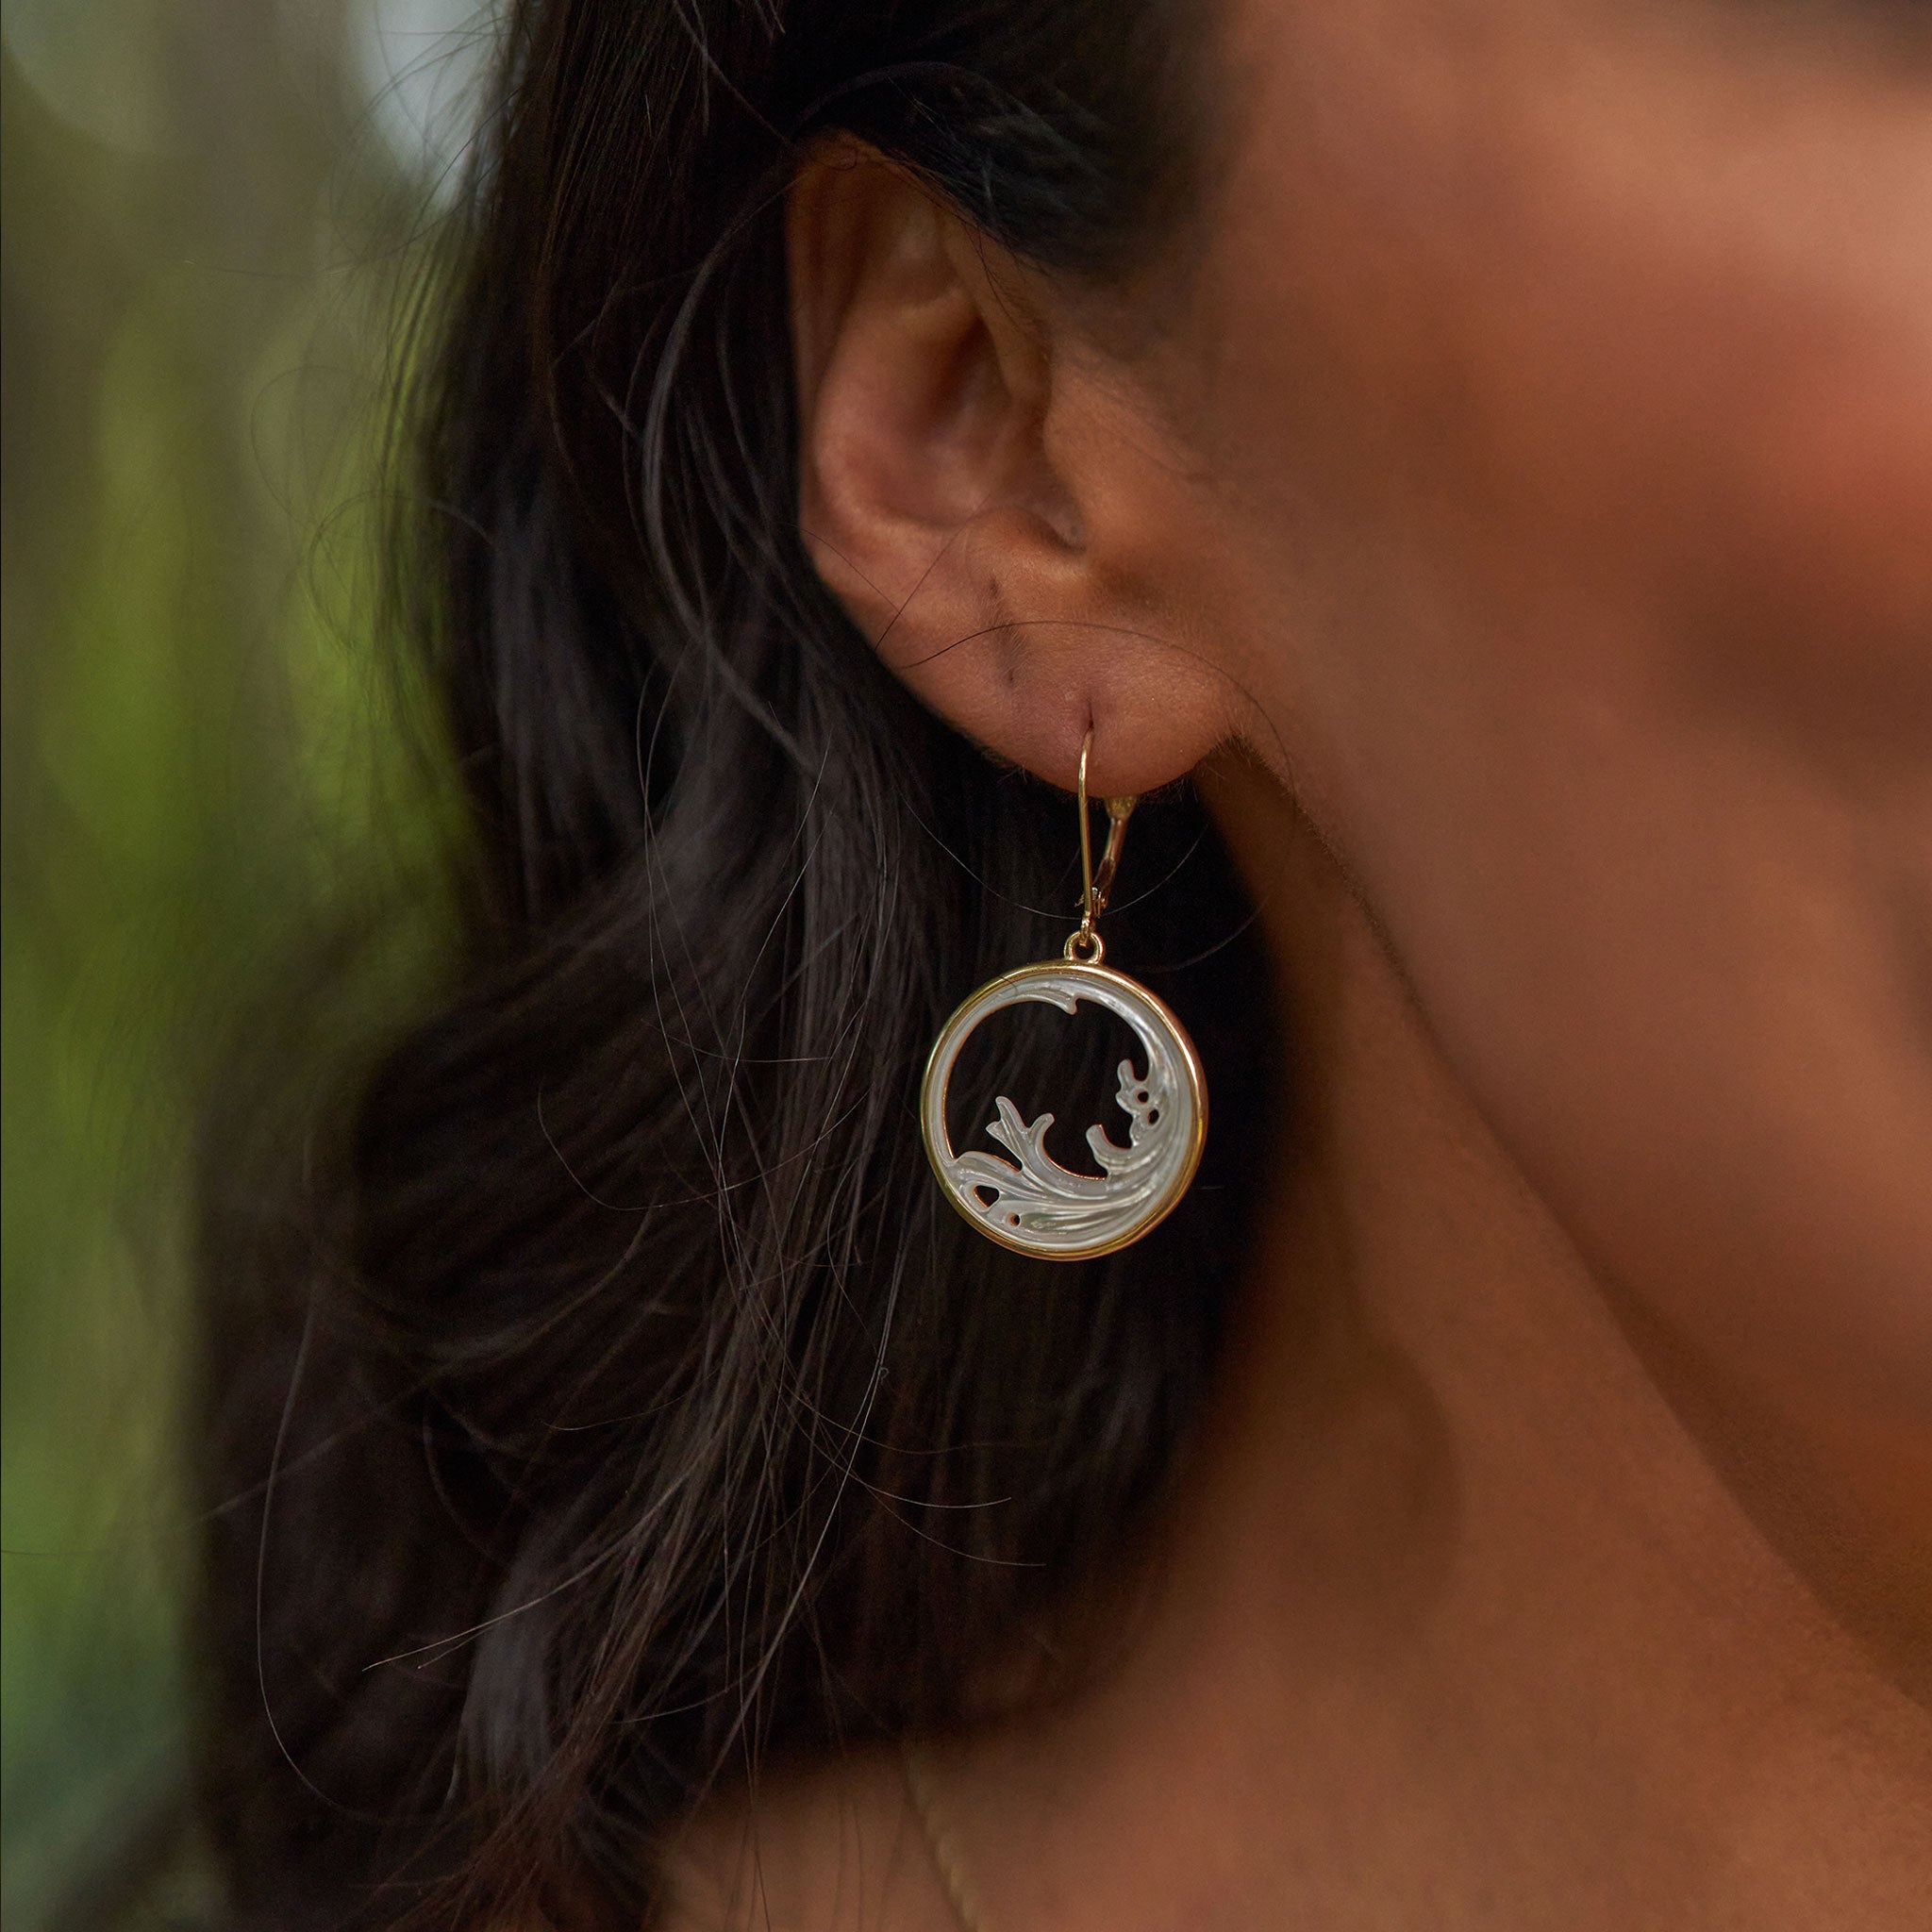 Nalu Splash Mother of Pearl Earrings in Gold - 22mm